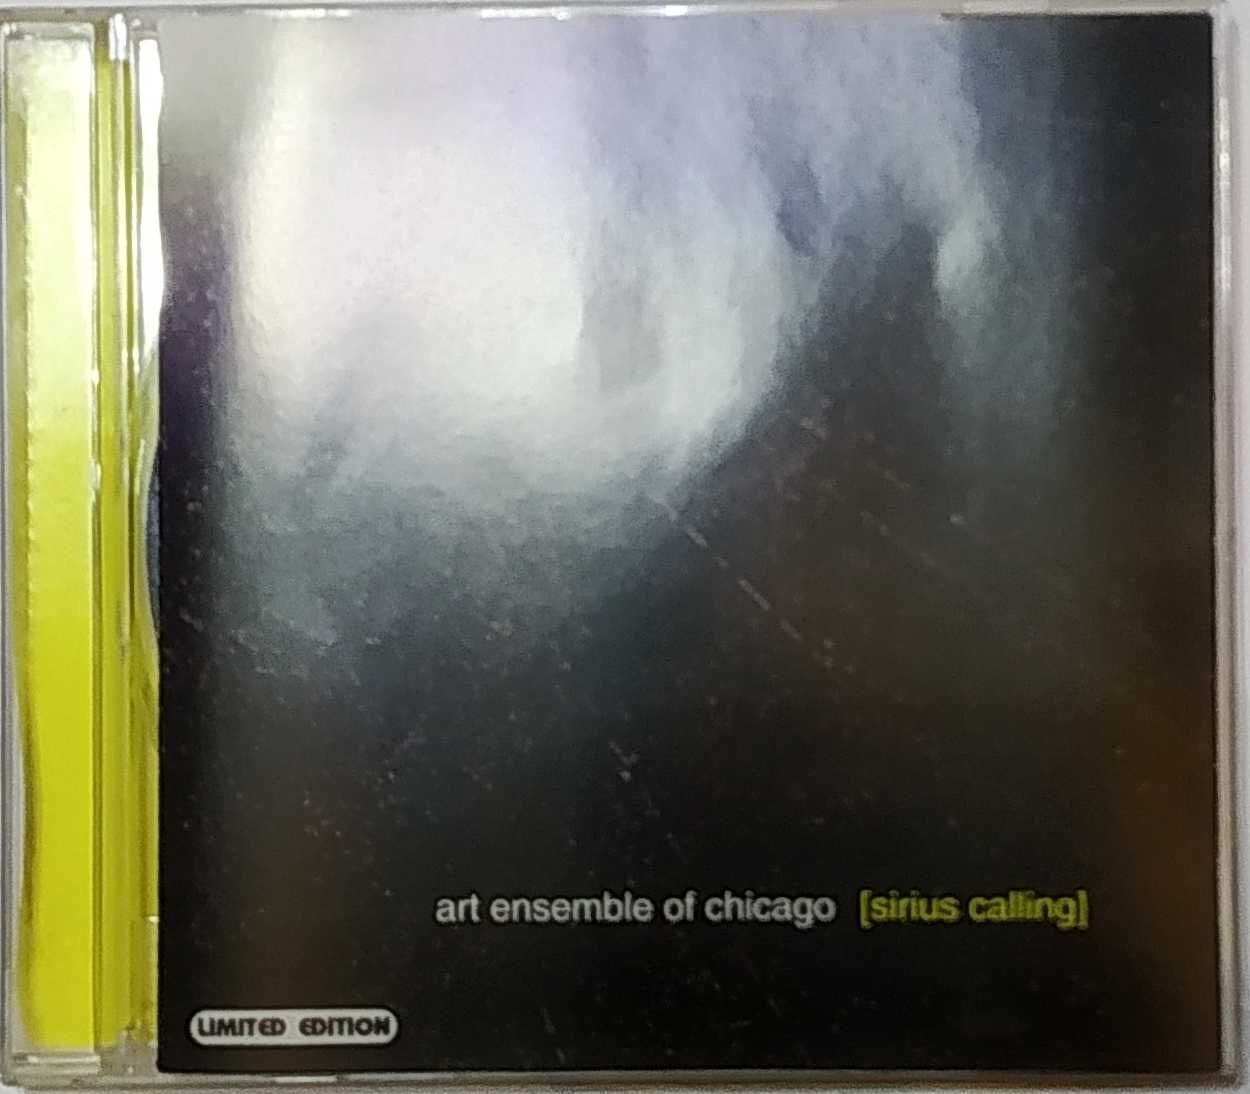 CD Art Ensemble Of Chicago (sirius calling)